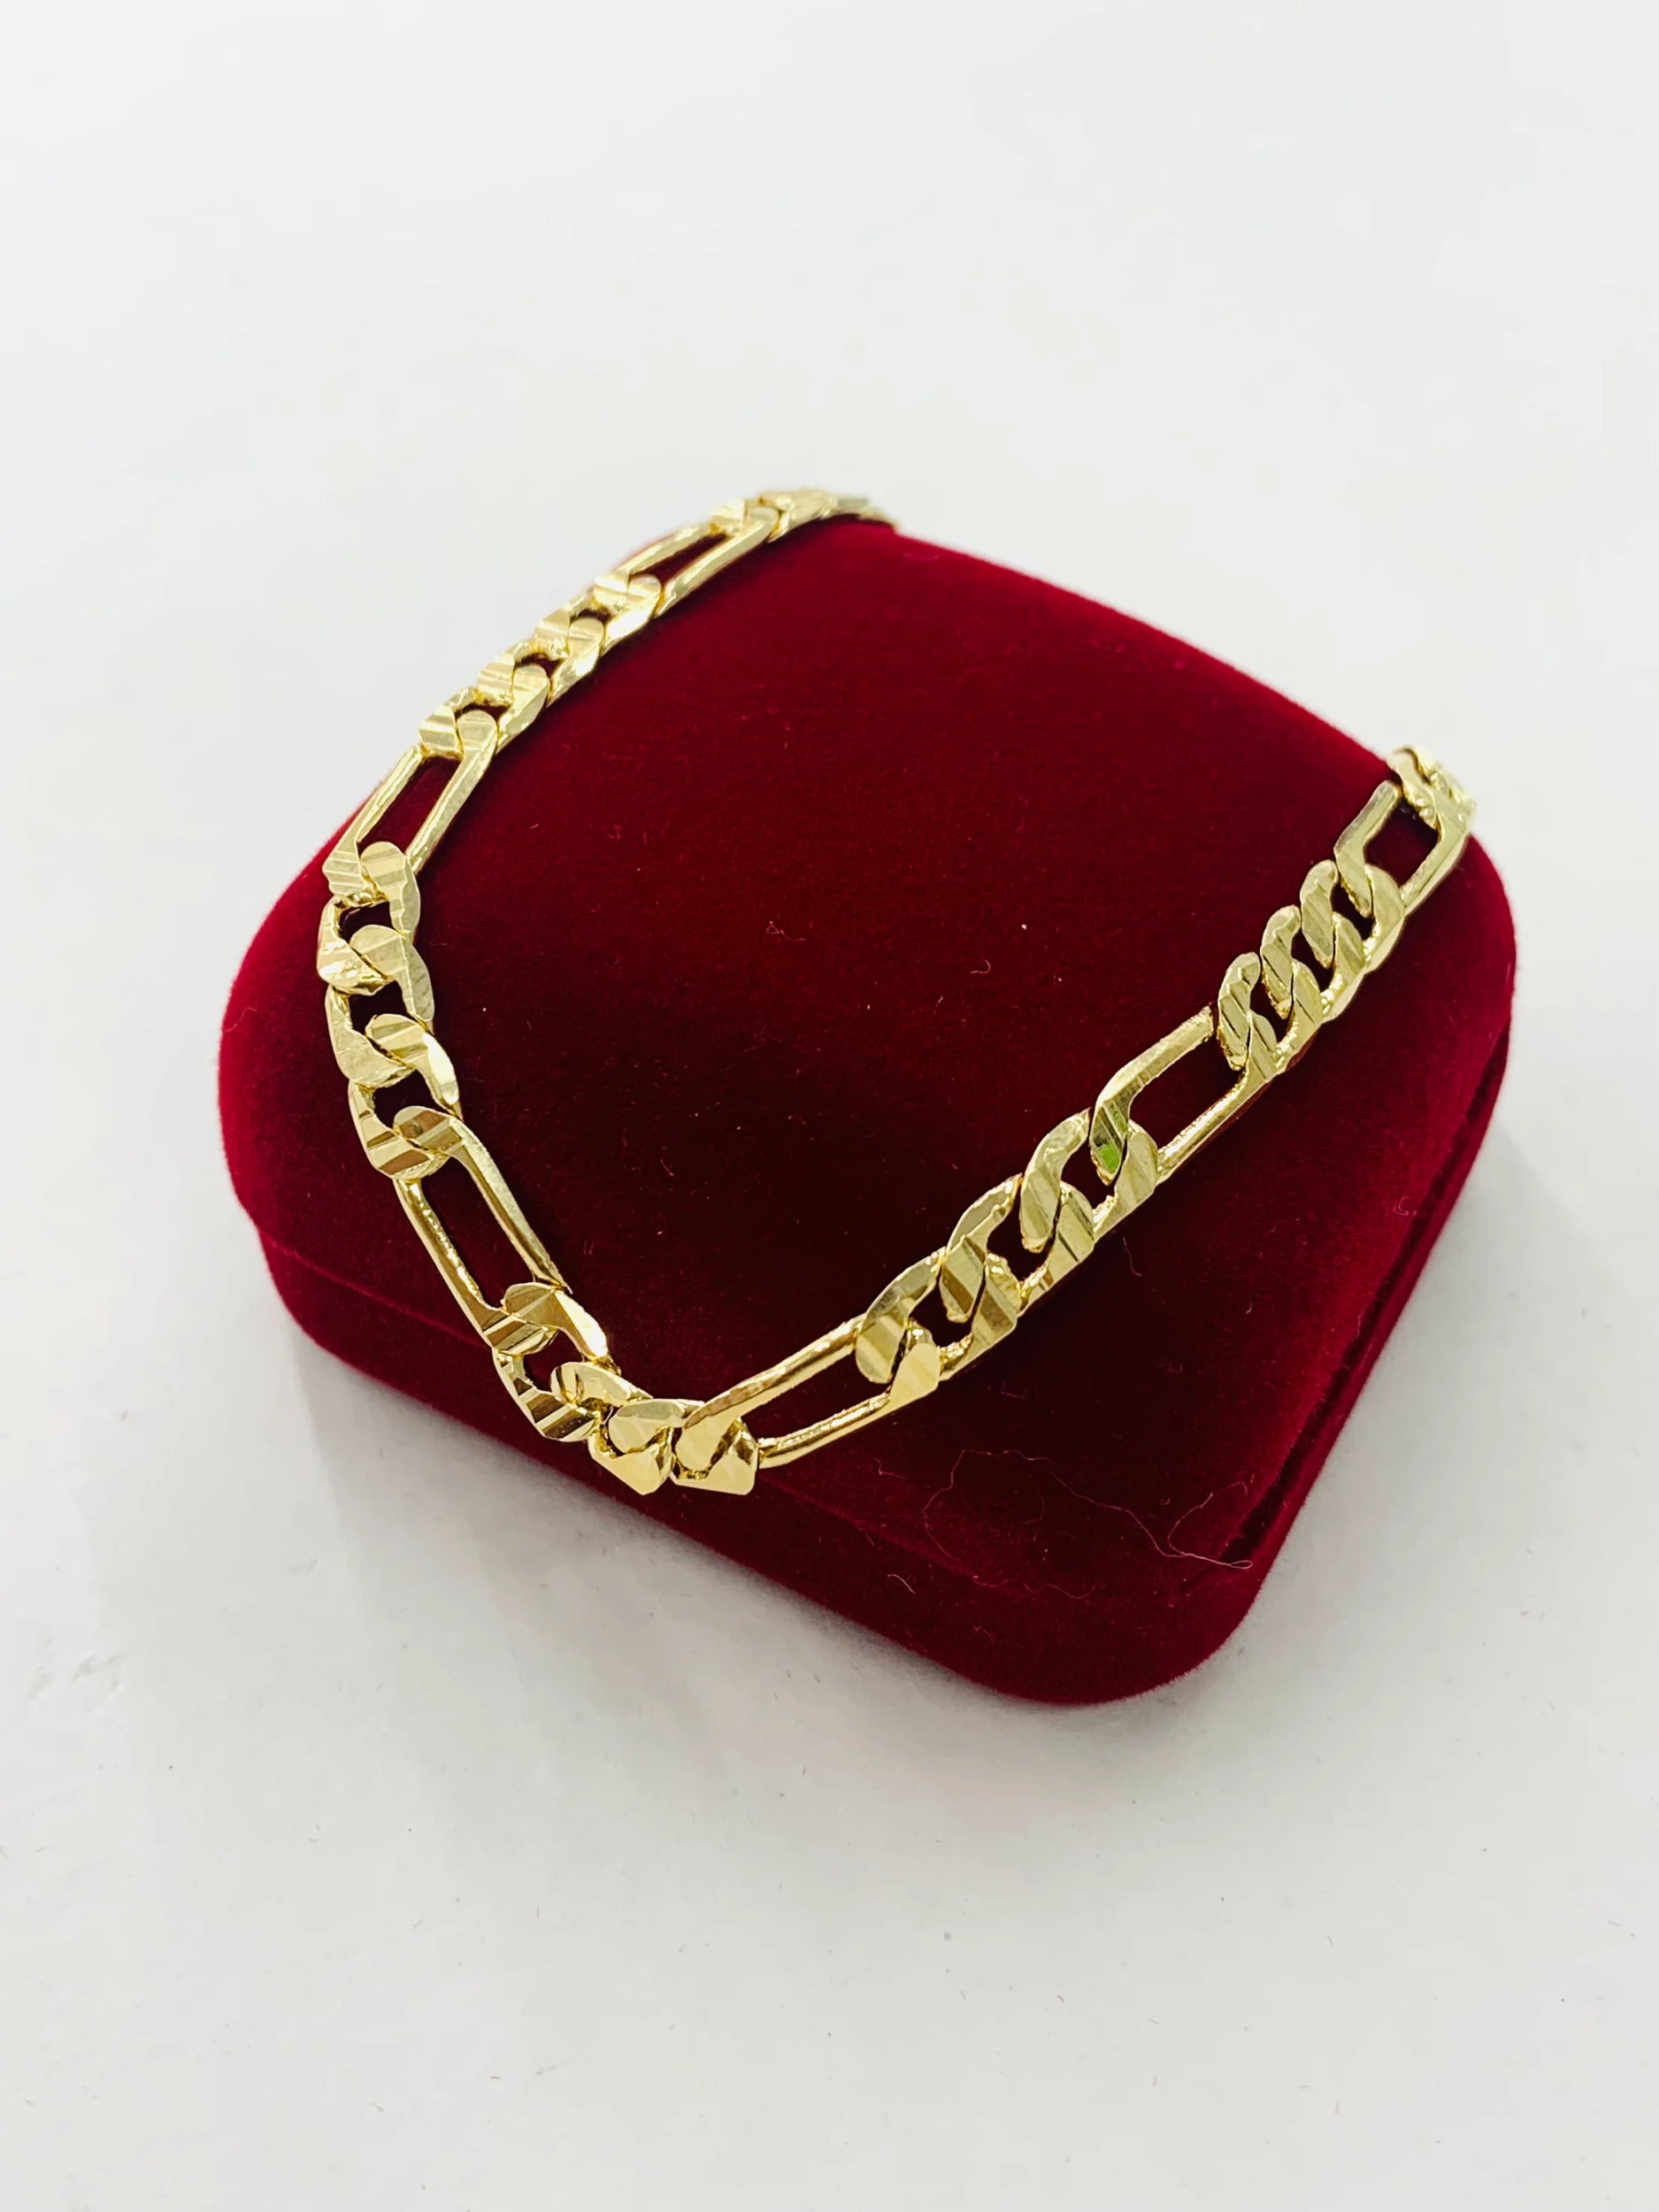 Men's Mariner Link, Cuban Link Bracelet, Figaro Link 14K Gold Filled Bracelet  Men's Jewelry / Pulsera para Hombre Oro Laminado Cuban Link, Figaro Link,  Mariner Link 